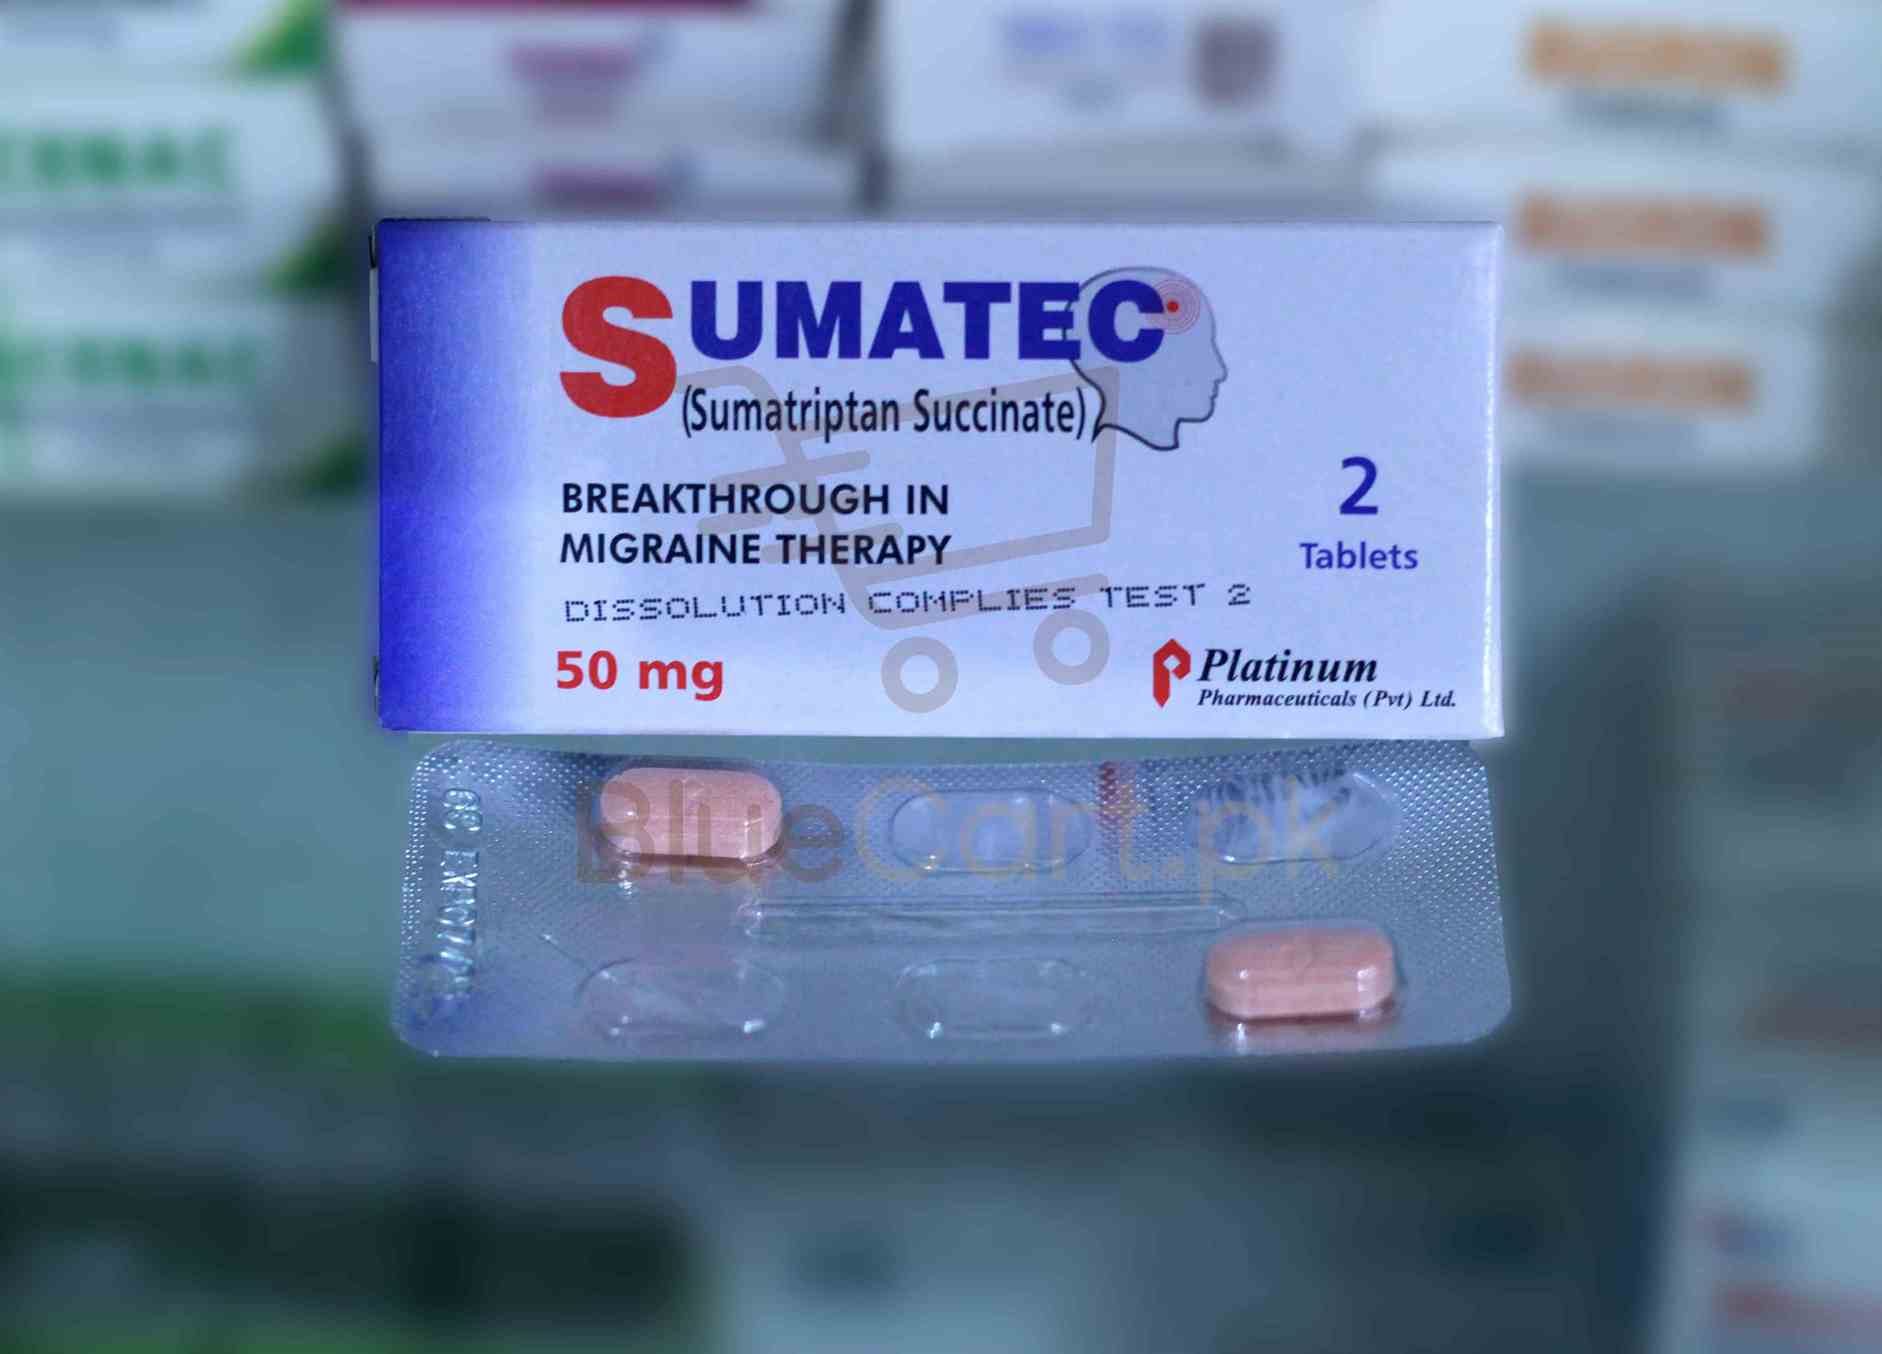 Sumatec Tablet 50mg